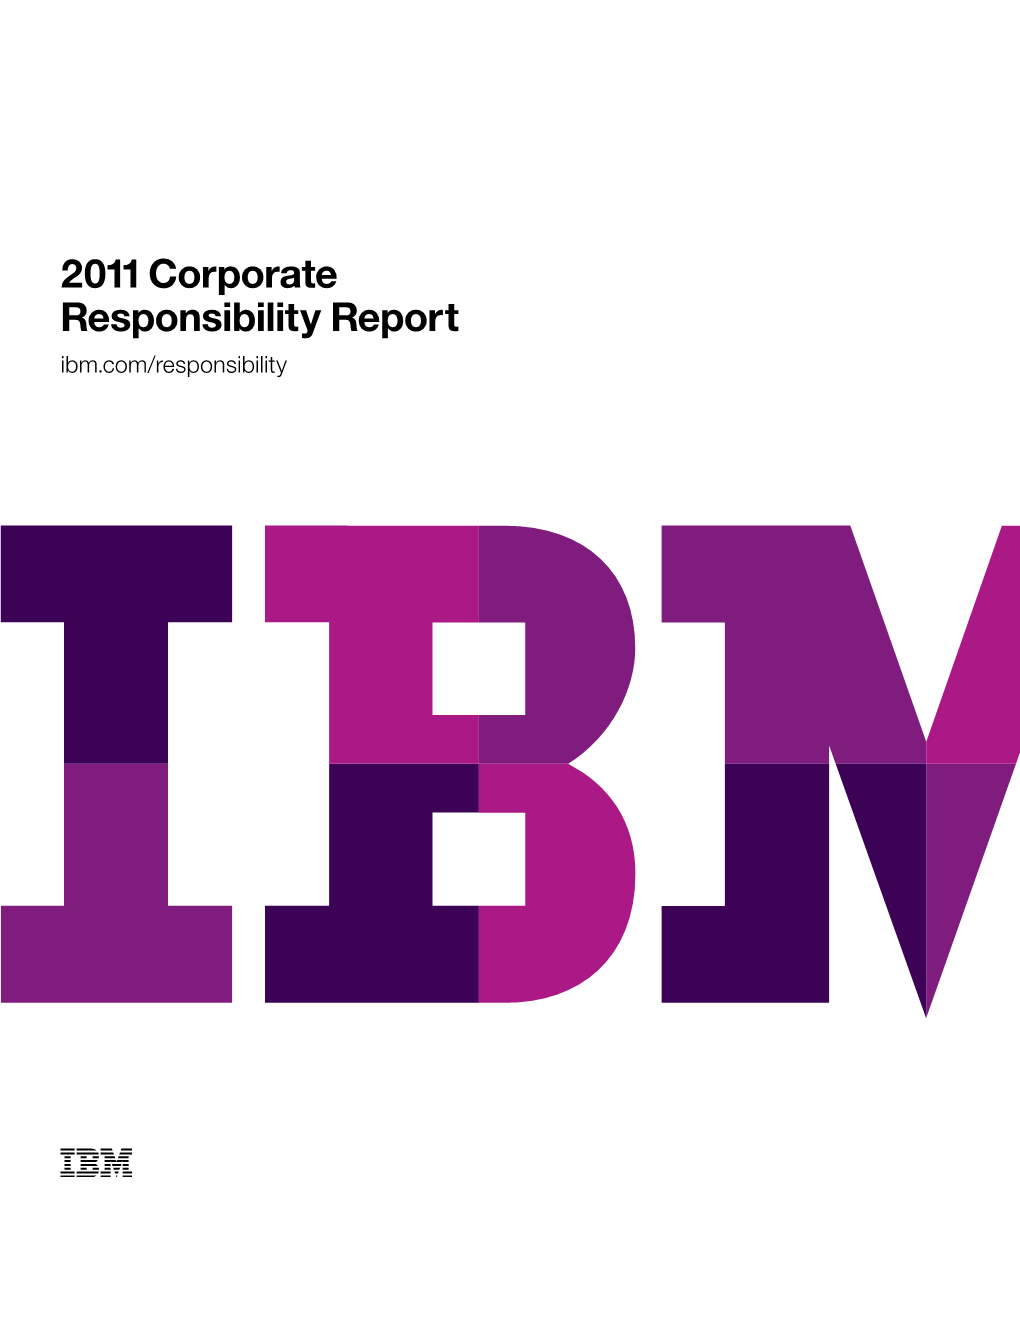 2011 IBM Corporate Responsibility Report